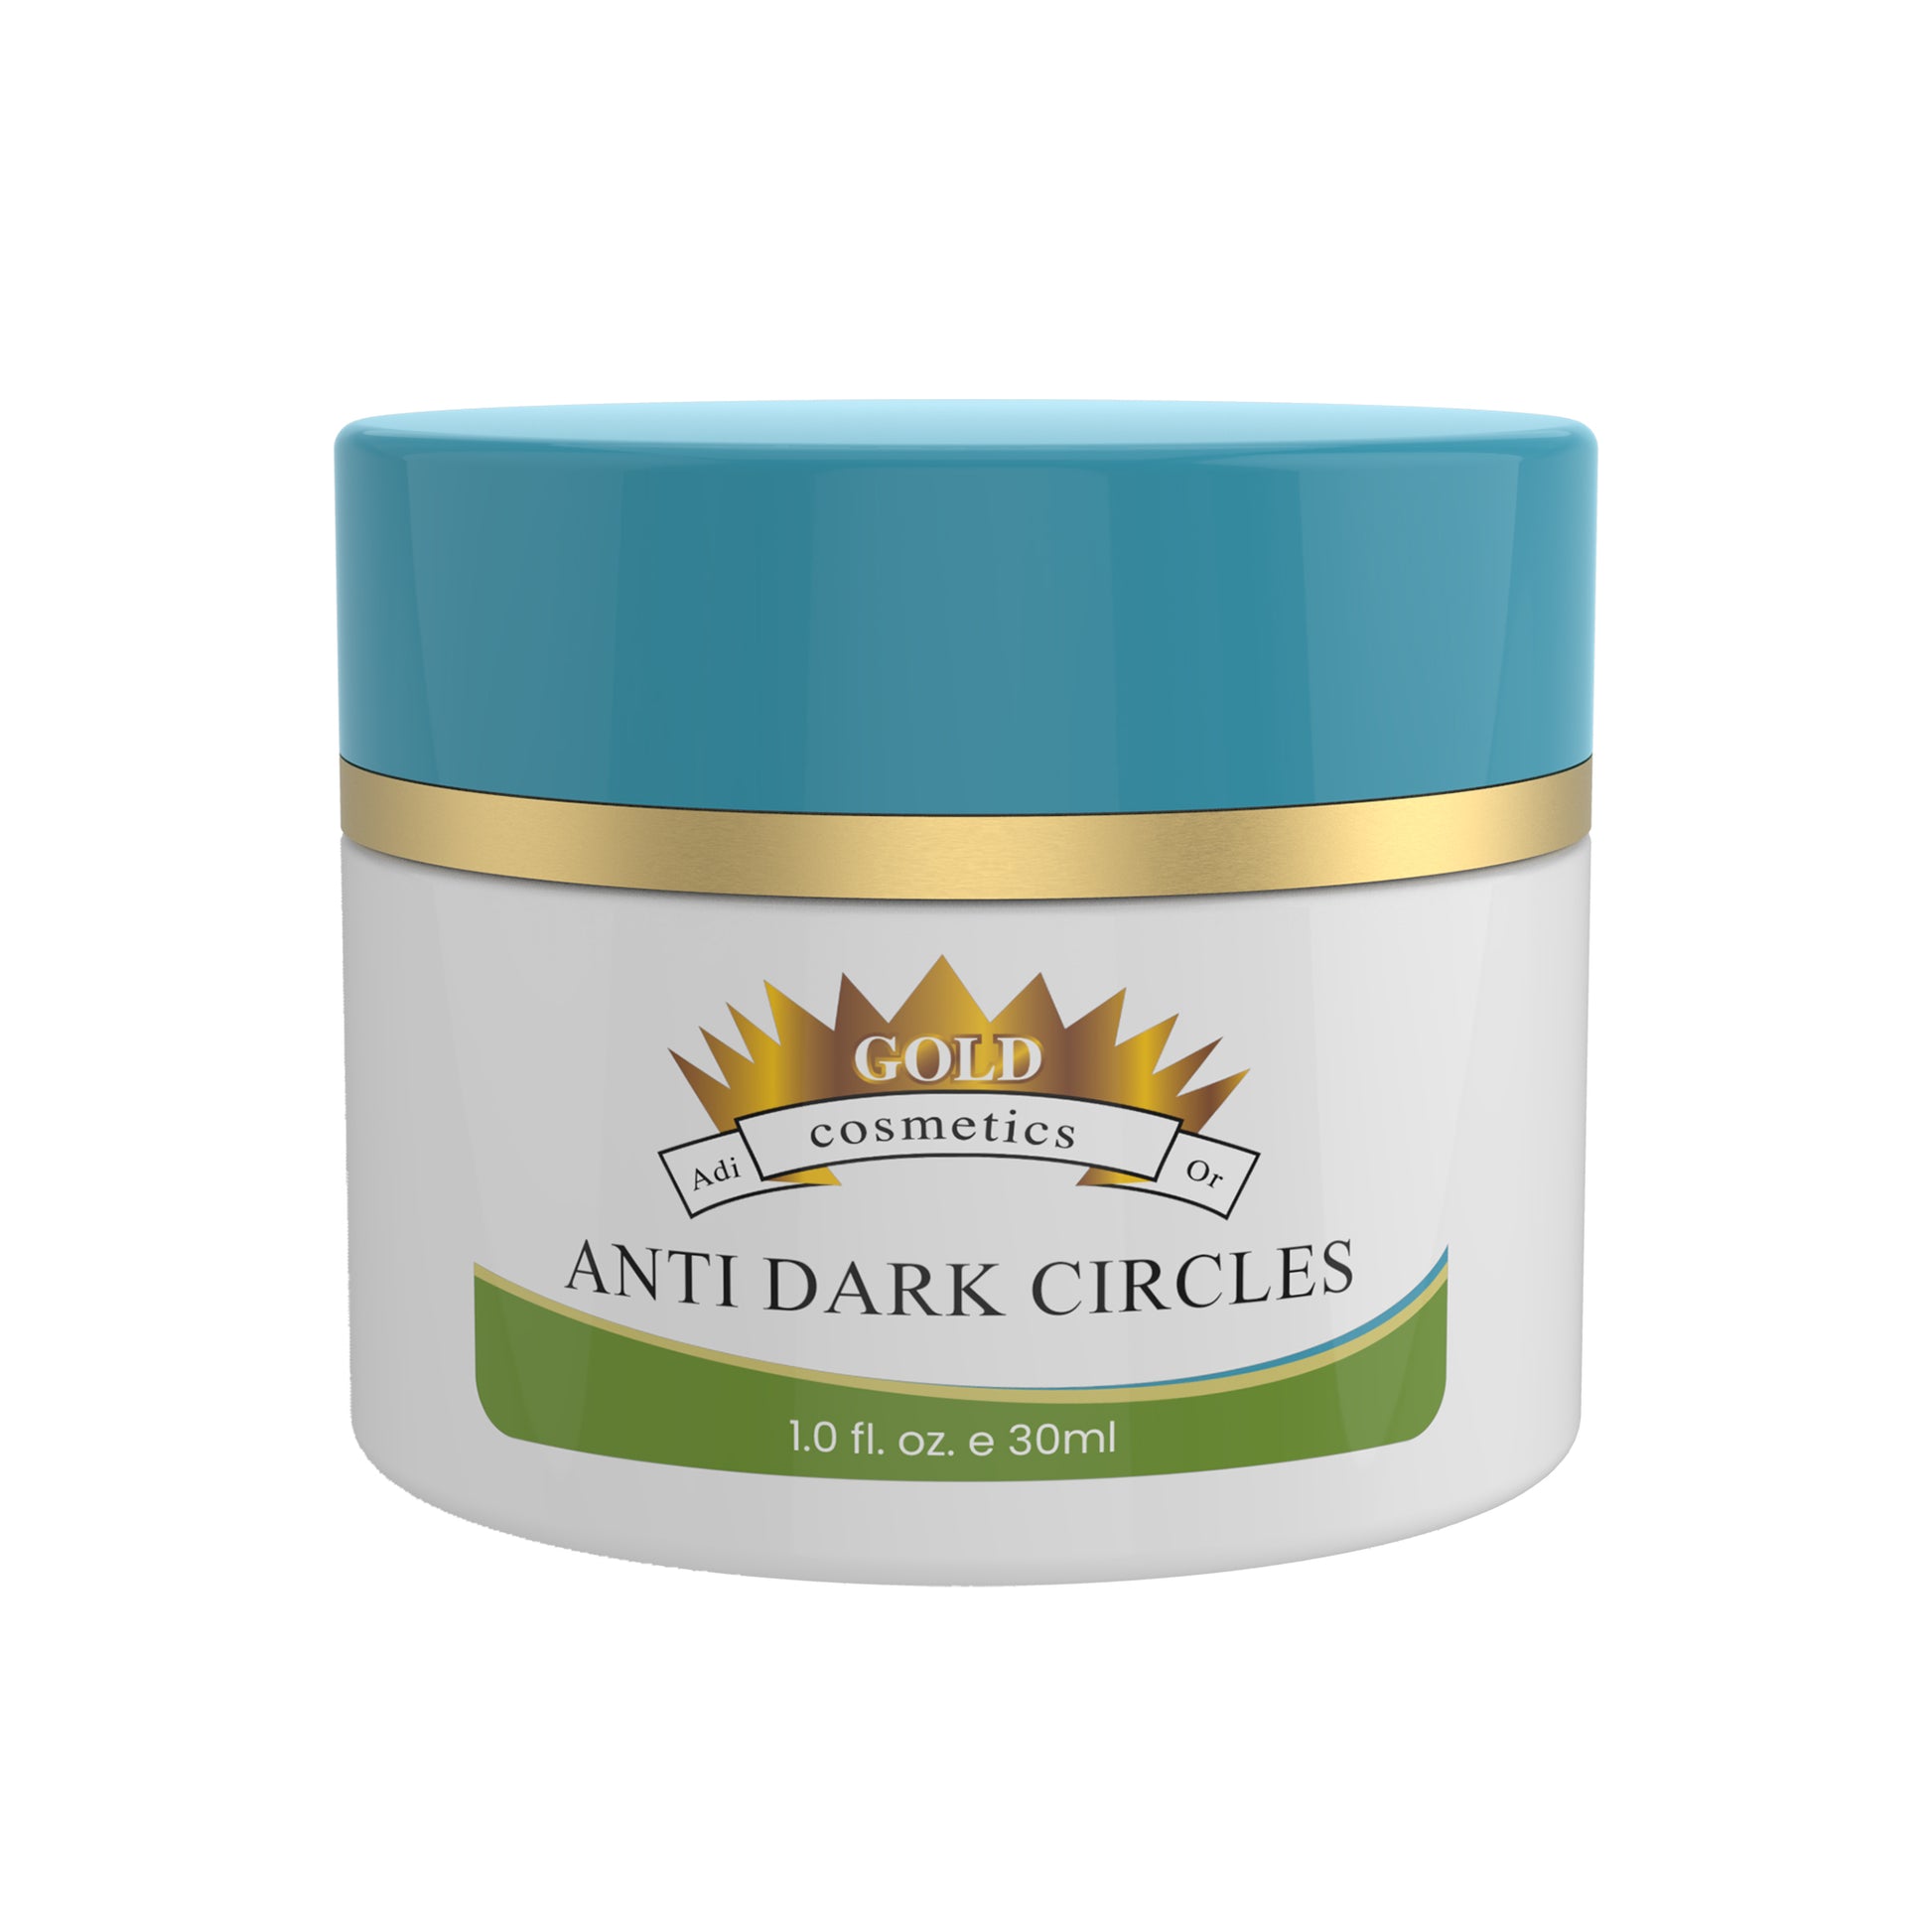 Anti dark circles - Gold Cosmetics & Skin Care